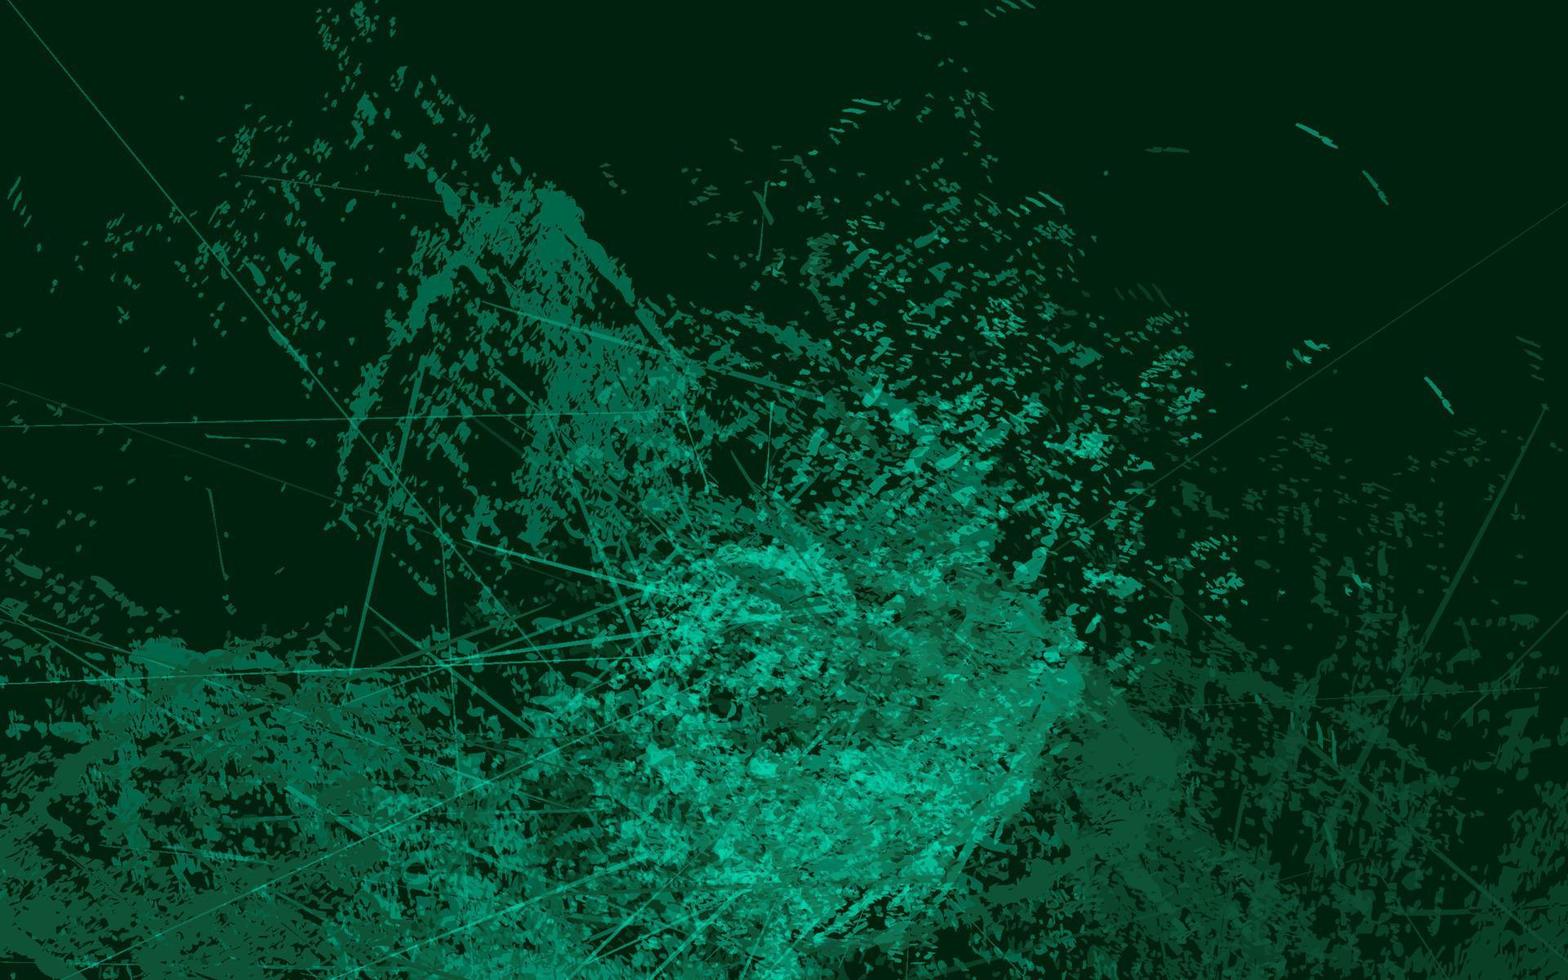 abstrakter Schmutzbeschaffenheits-Spritzer malen dunkelgrünen Farbhintergrund vektor